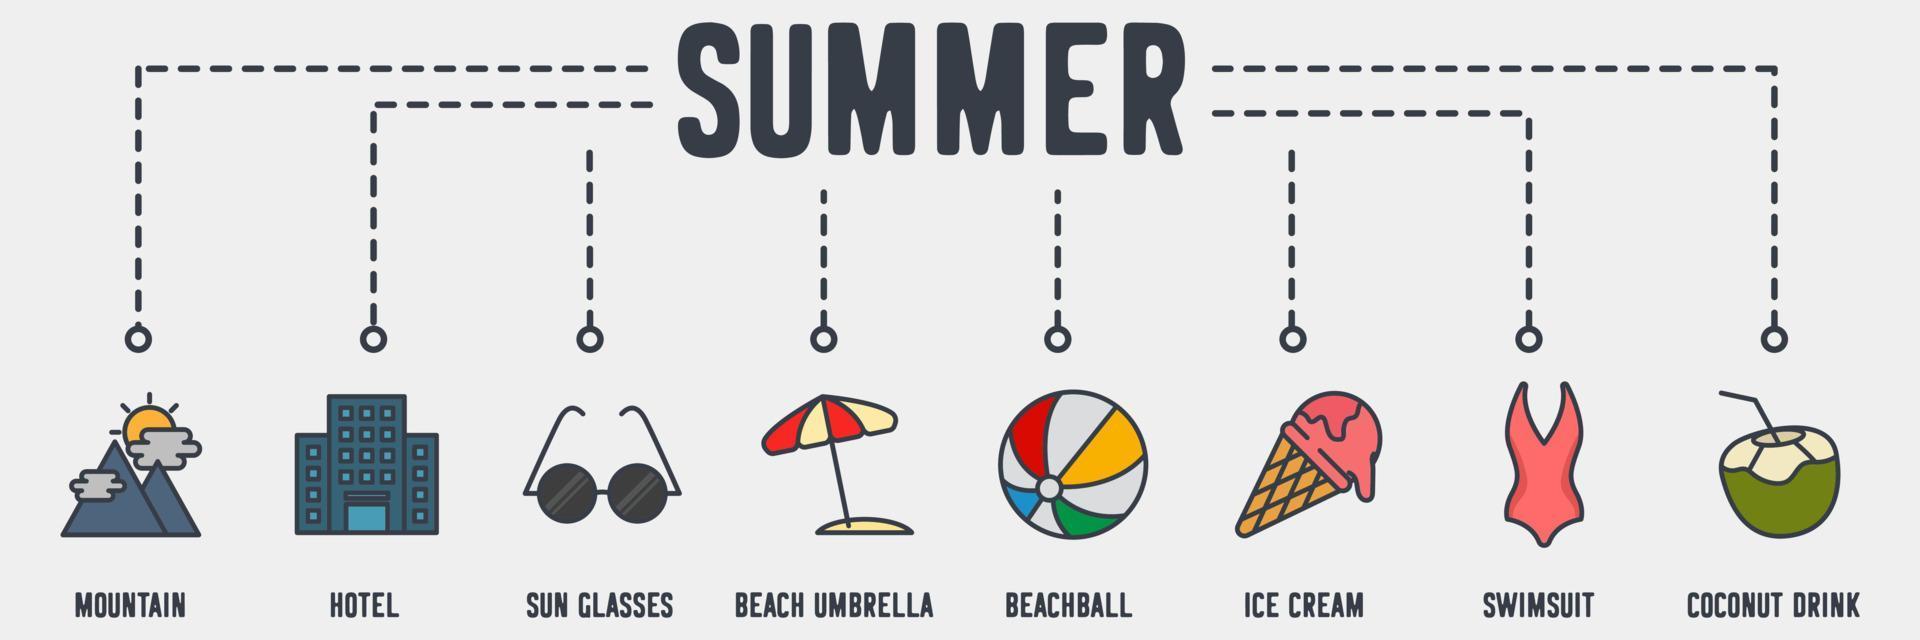 Summer banner web icon. mountain, hotel, sun glasses, beach umbrella, beachball, ice cream, swimsuit, coconut drink vector illustration concept.